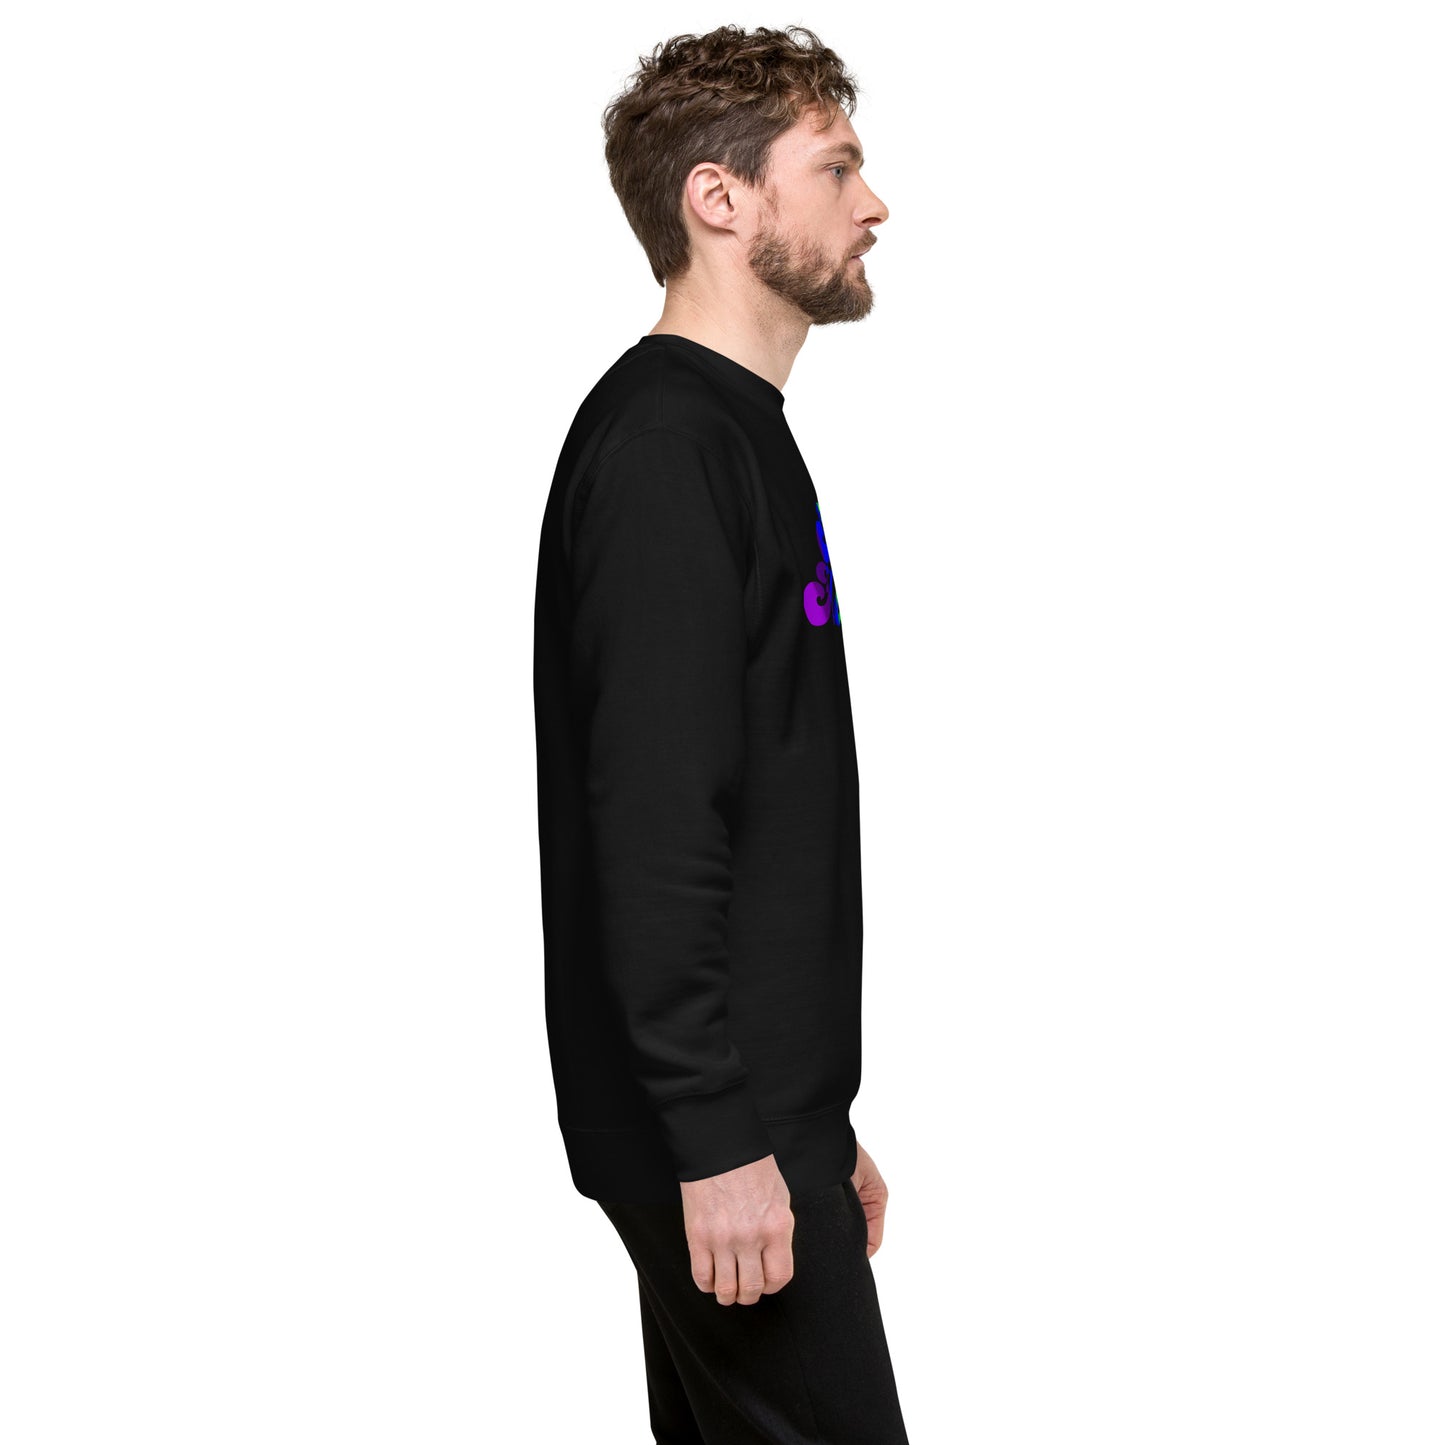 Radiate Harmony - printed Unisex Premium Sweatshirt